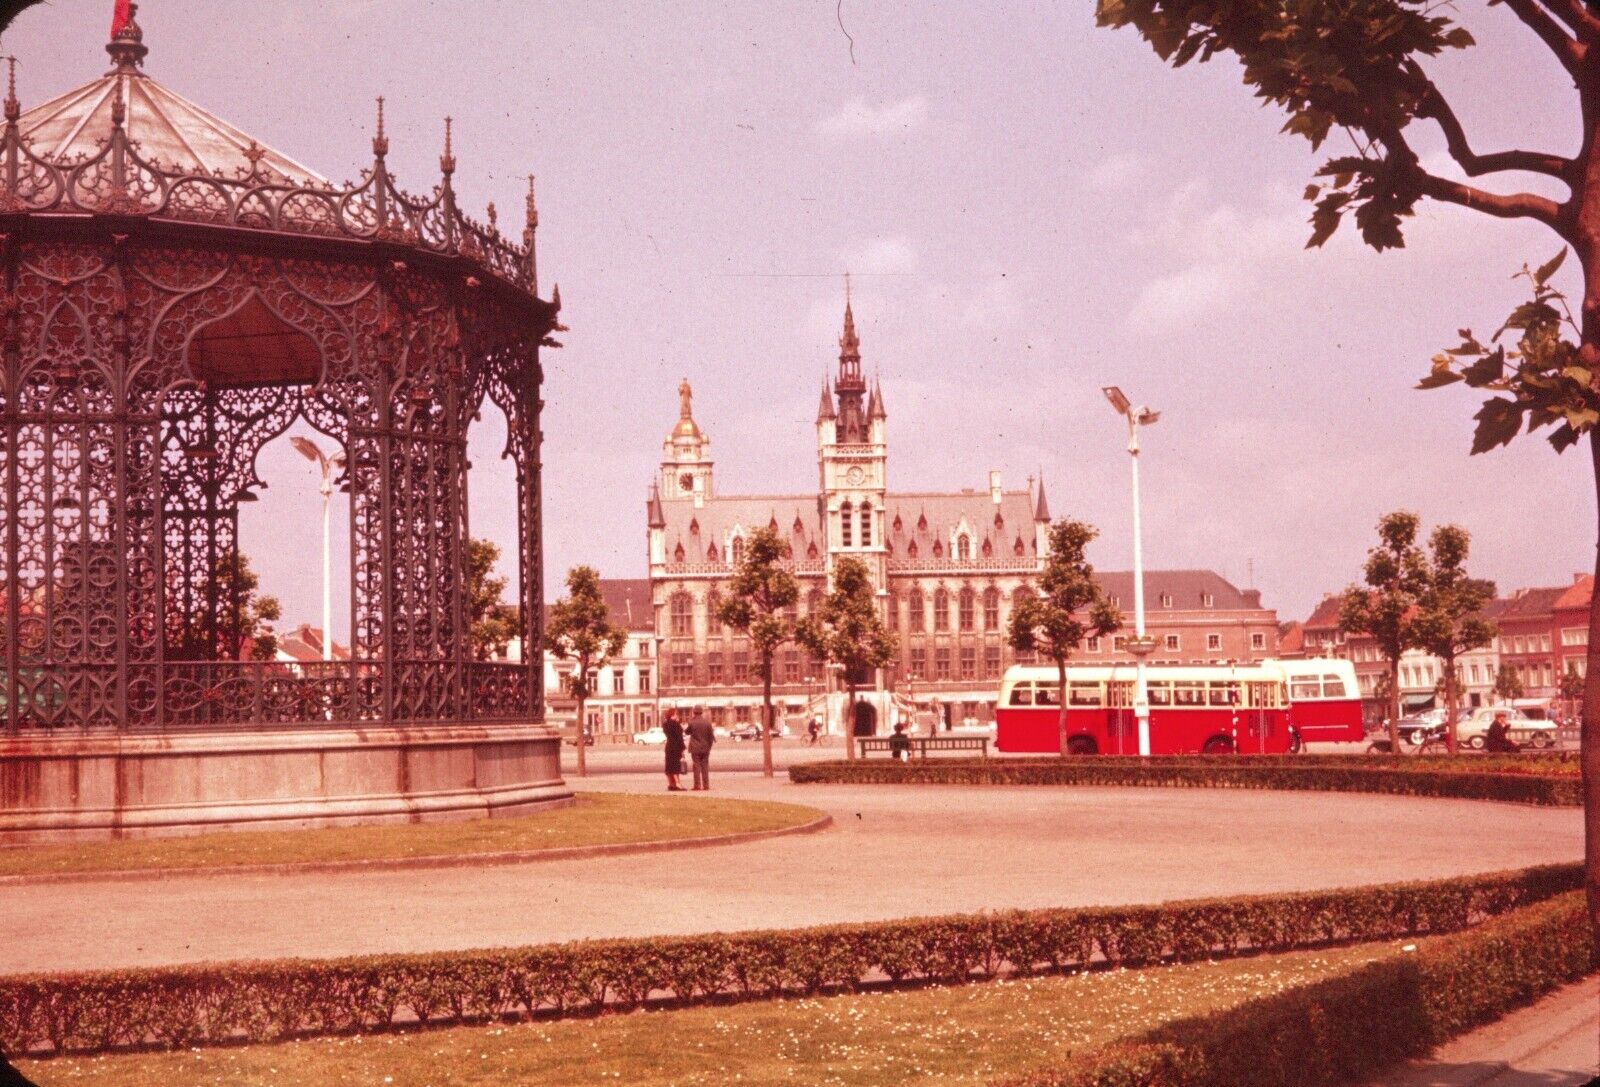 1958 City Town Hall Sint Niklaas Belgium Europe Vintage 35mm Slide